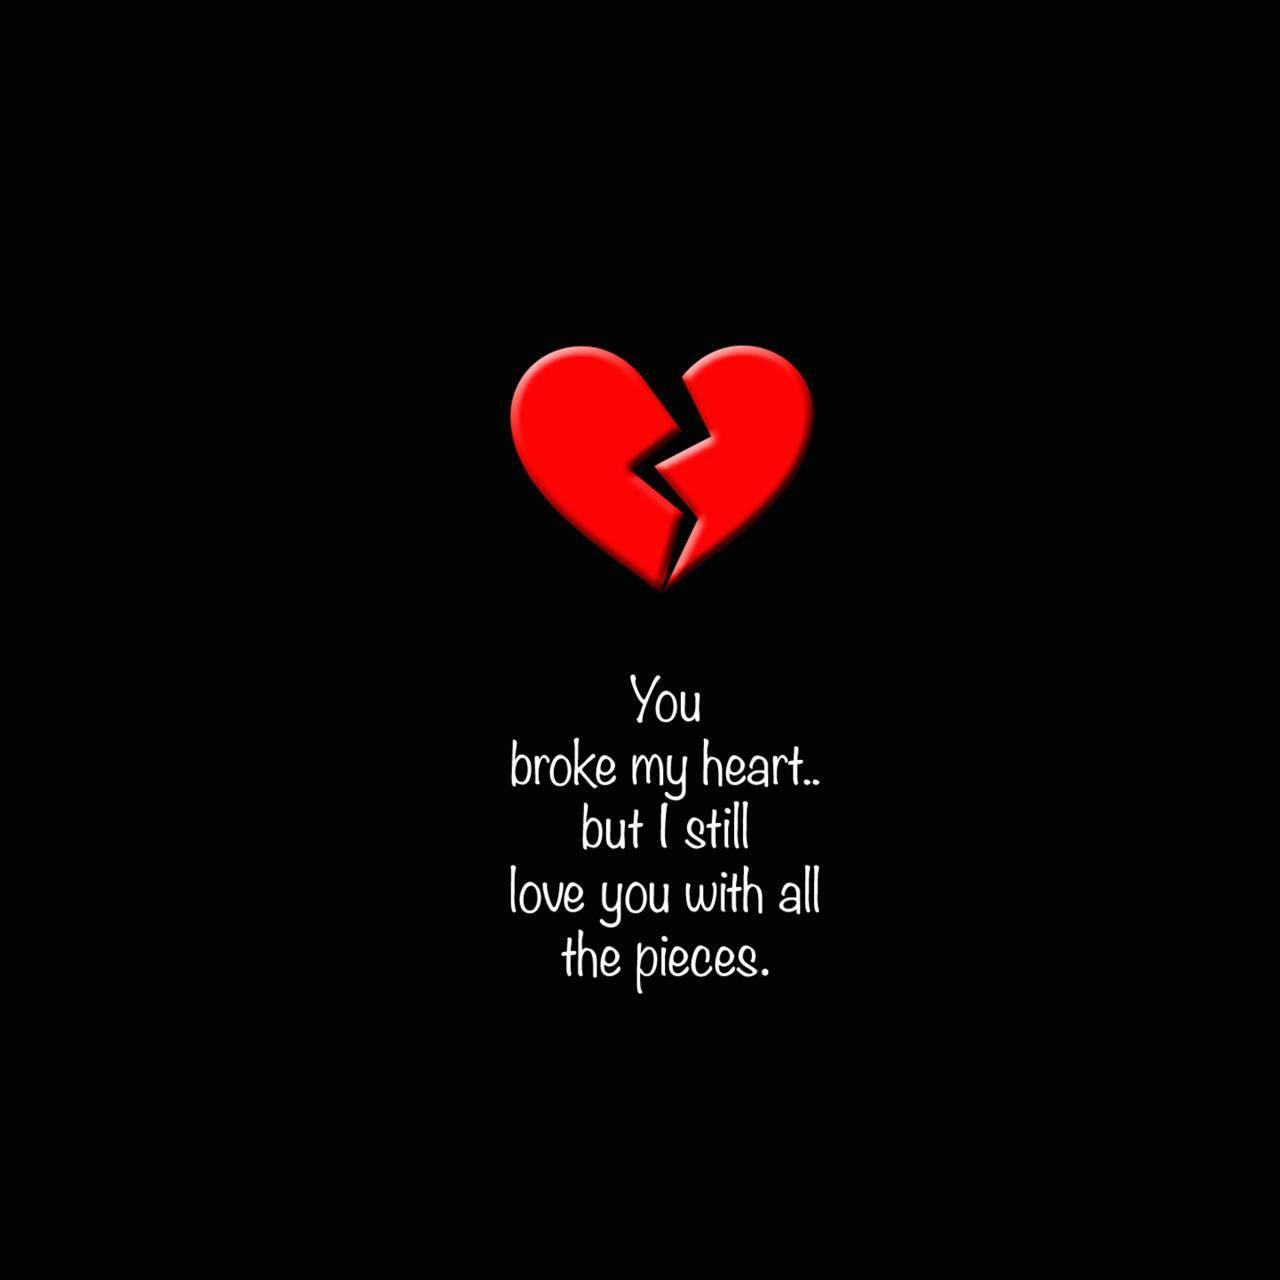 Broken Heart. Broken heart wallpaper, Heart